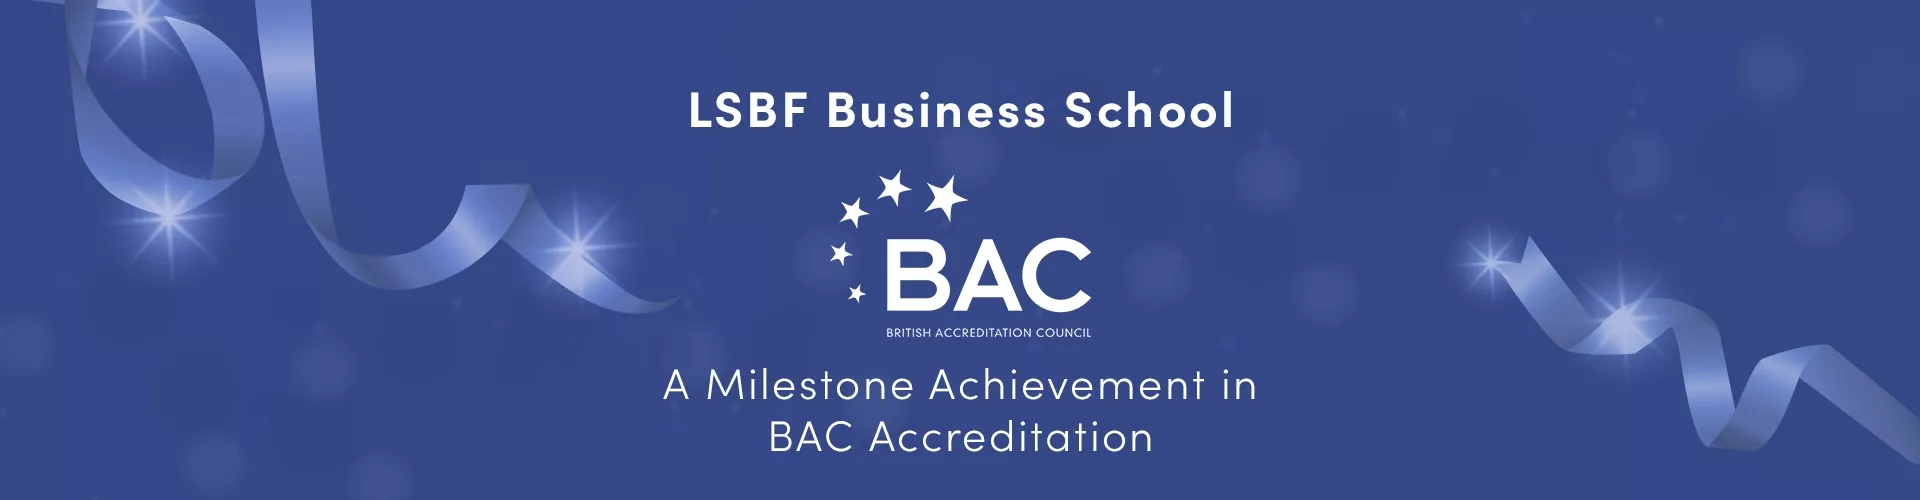 LSBF Business School: A Milestone Achievement in BAC Accreditation